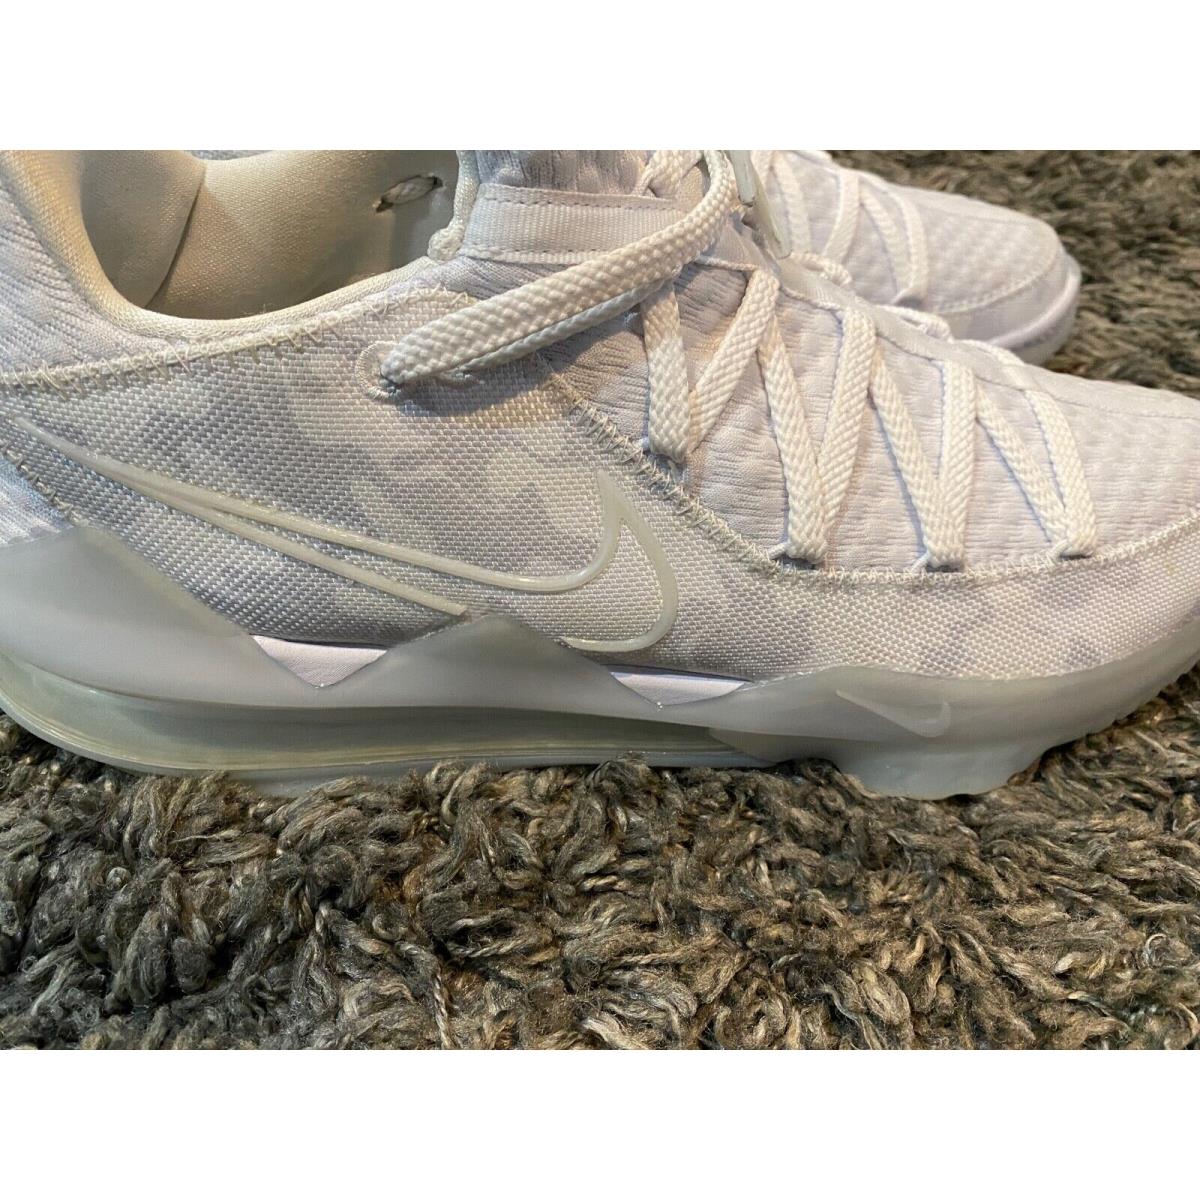 Nike shoes LeBron - White 4